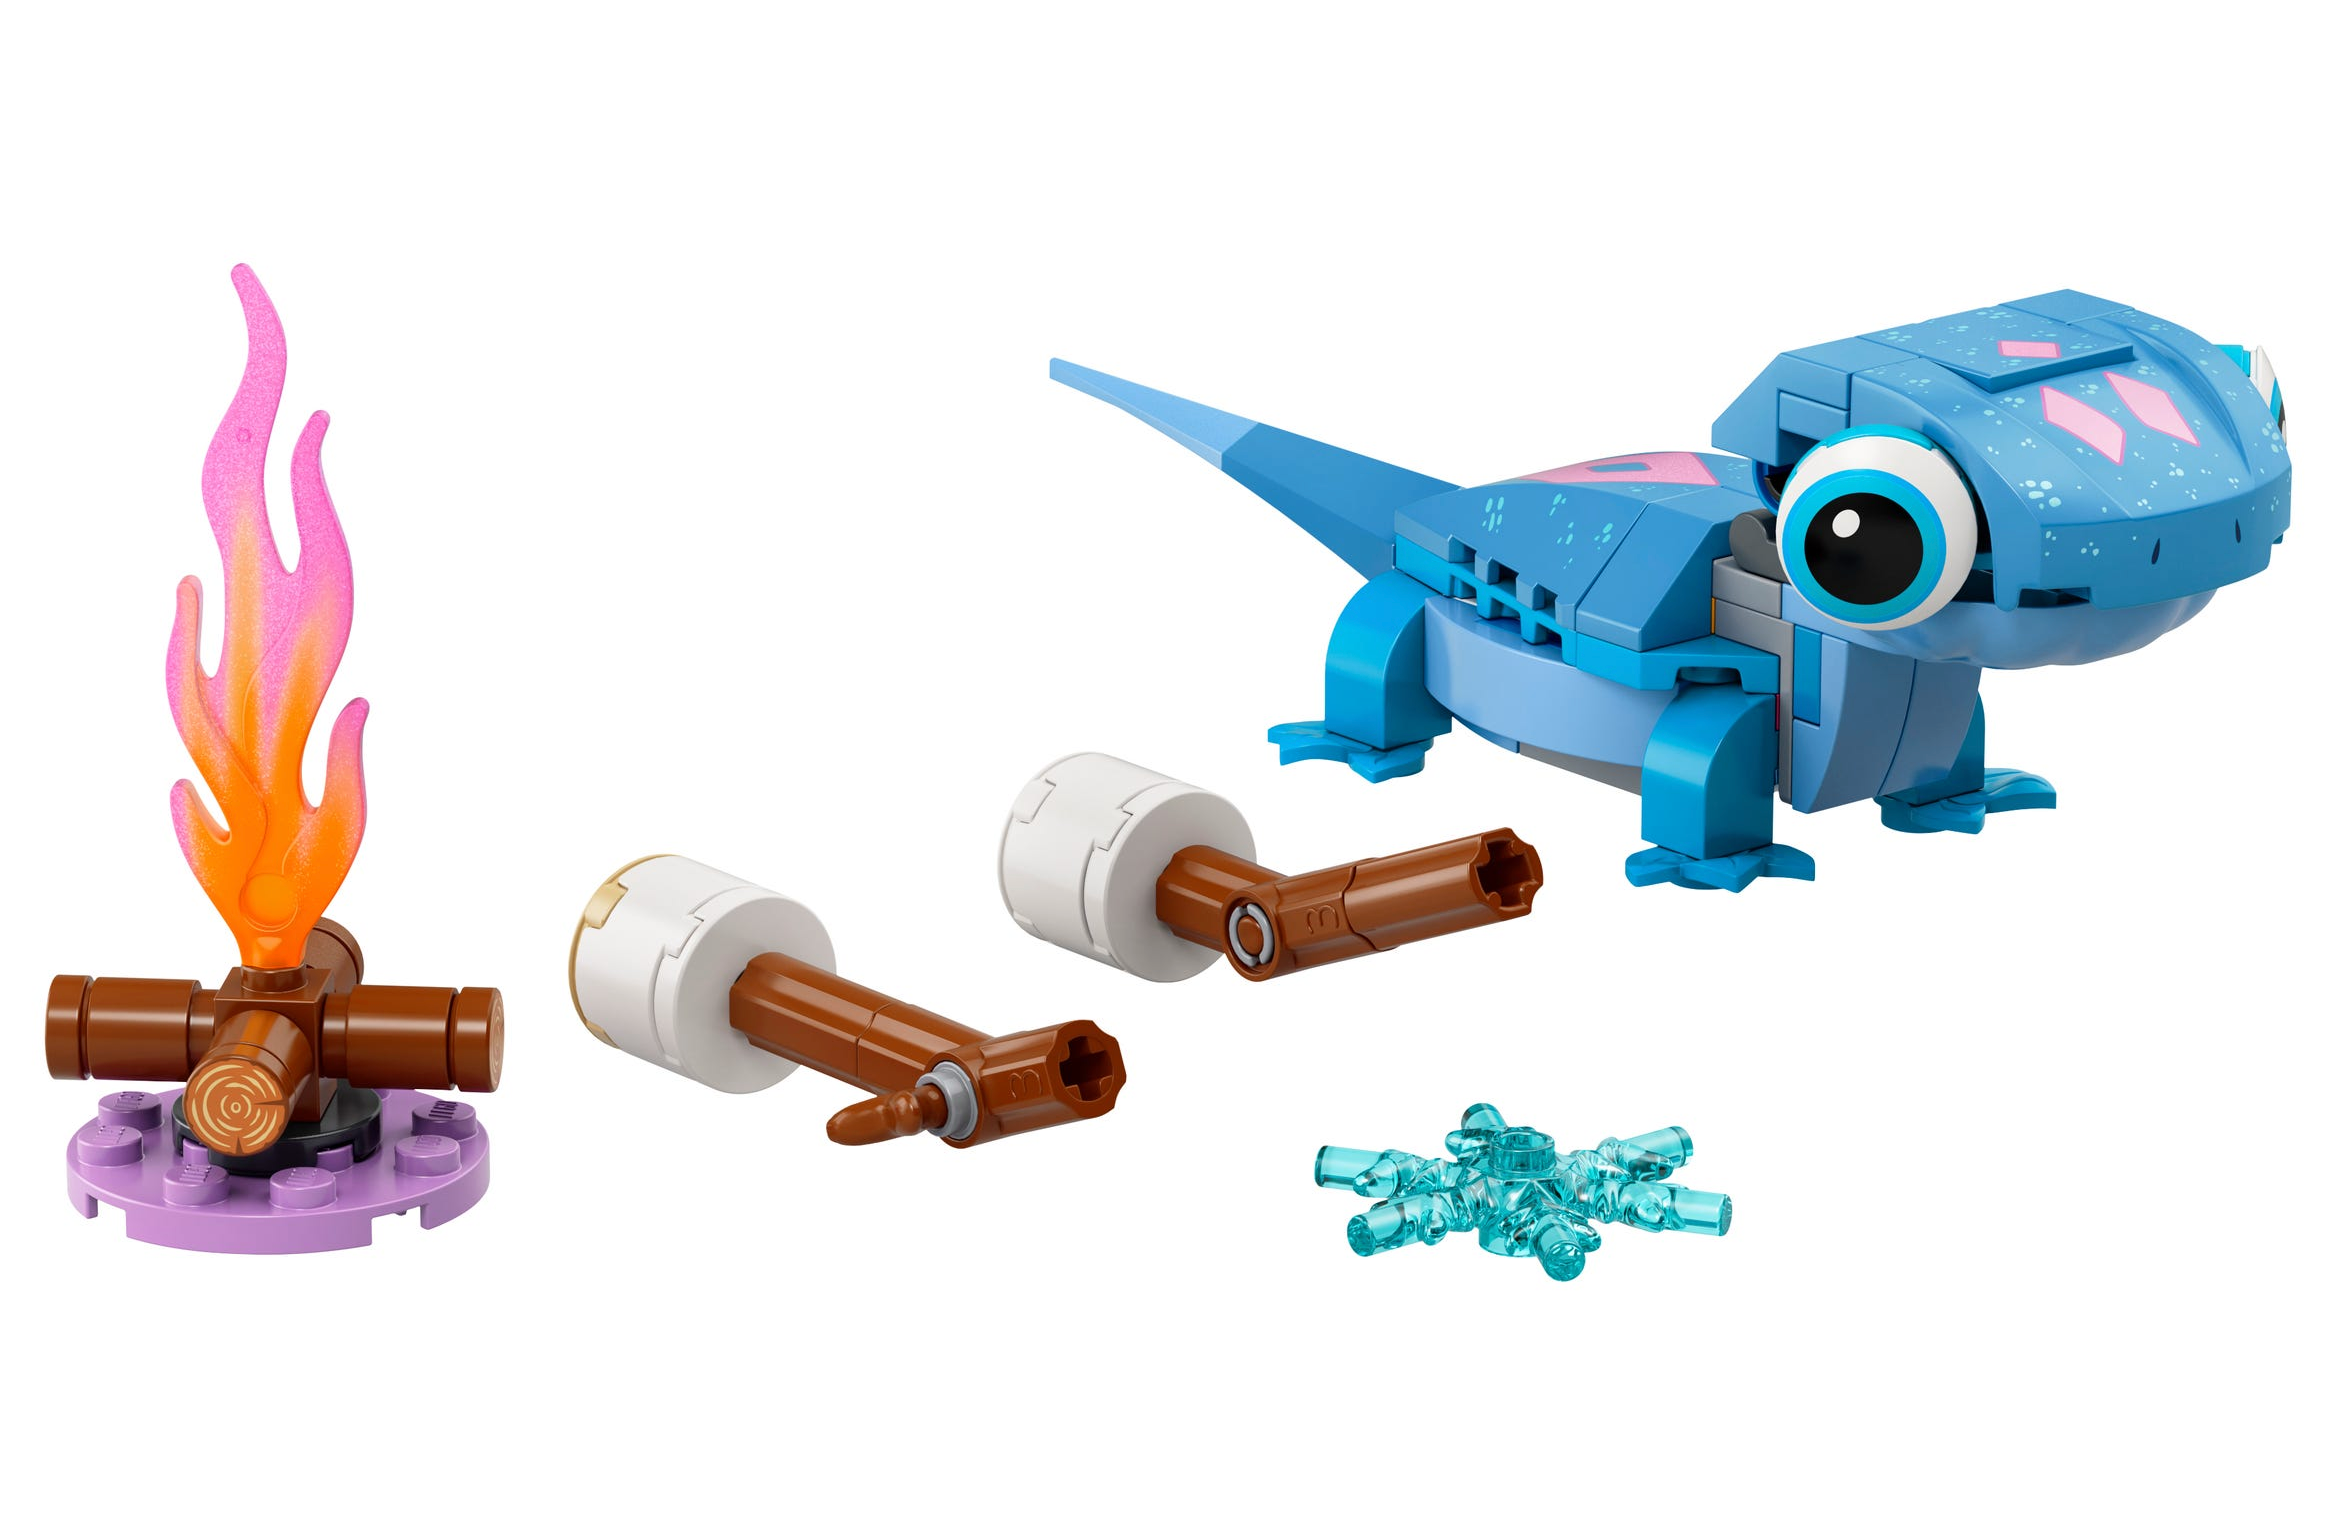 LEGO: Disney Princess - Bruni the Salamander Buildable Character